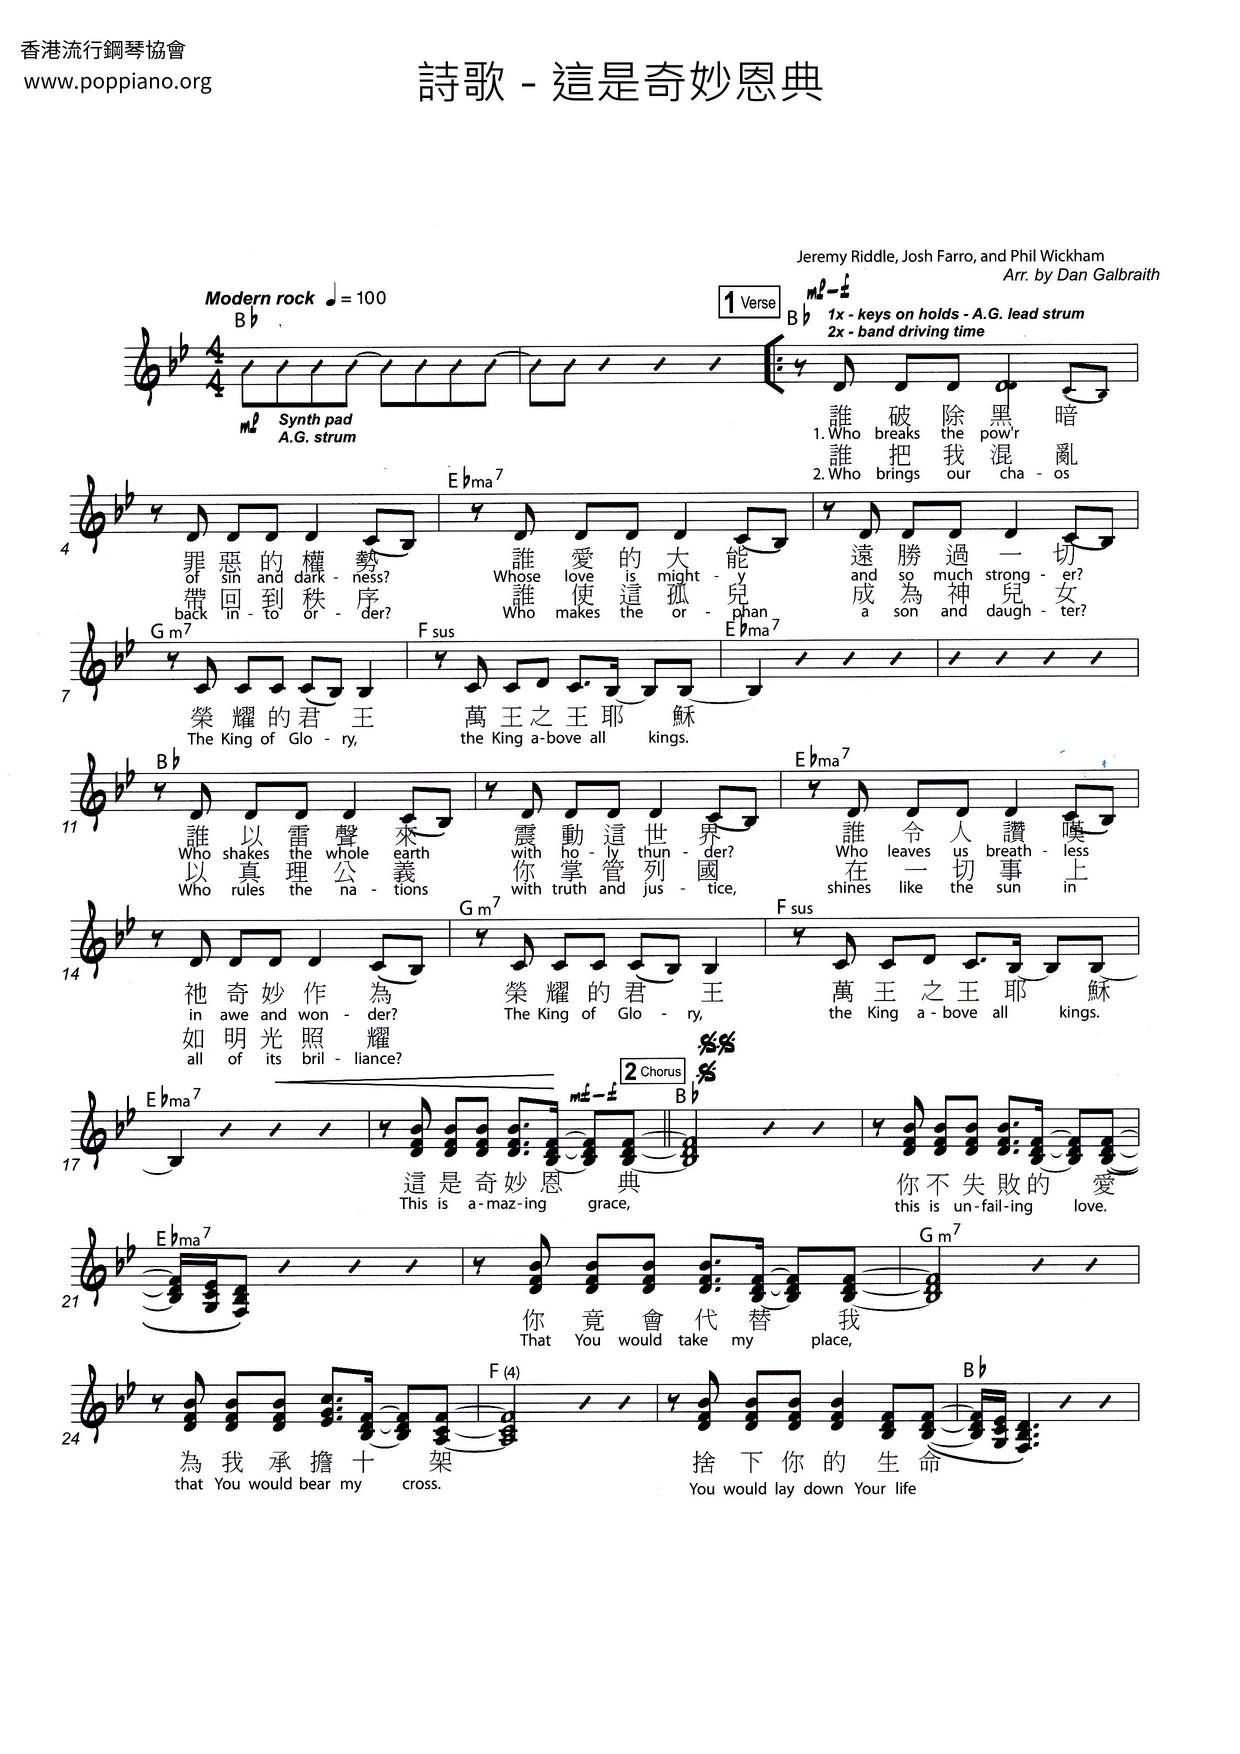 This Is Wonderful Grace Score